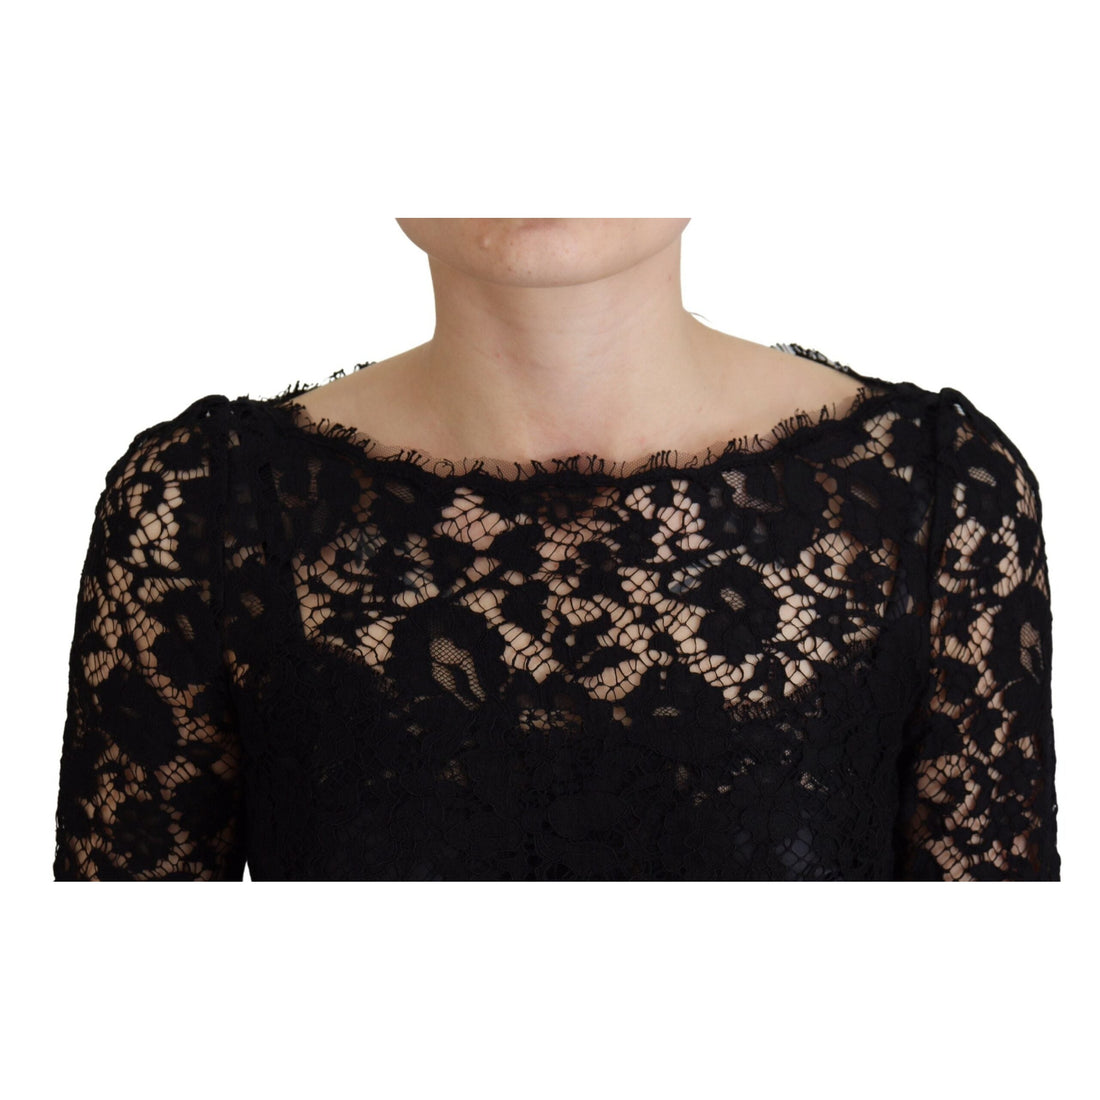 Dolce & Gabbana Elegant Floral Lace Long Sleeve Top